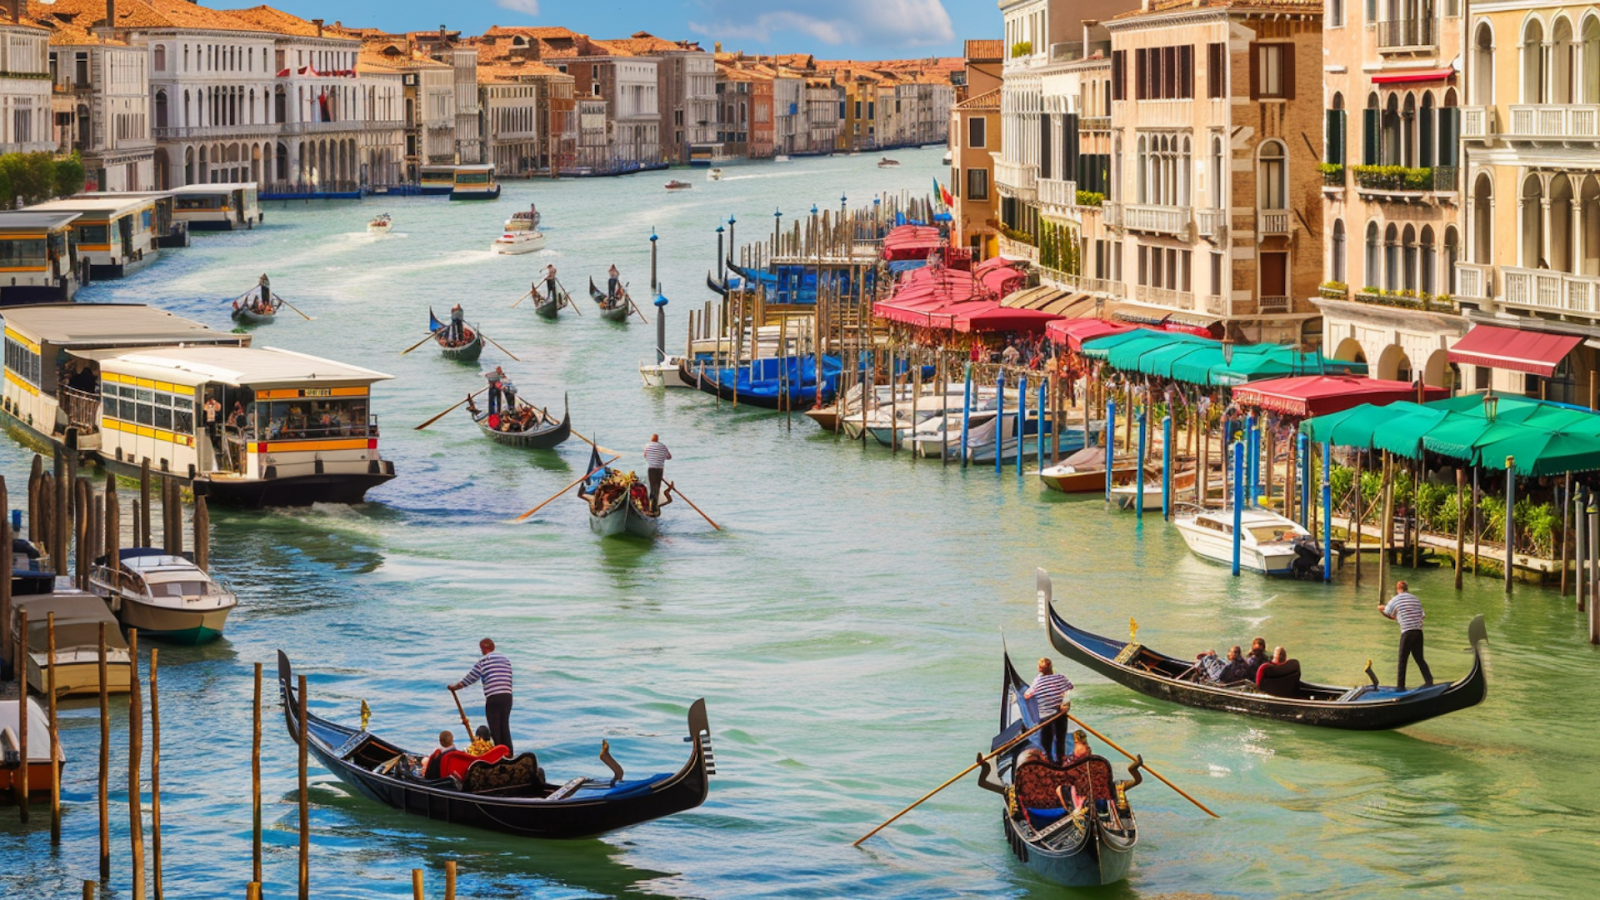 Gondolas sailing along the Grand Canal in Venice, Italy